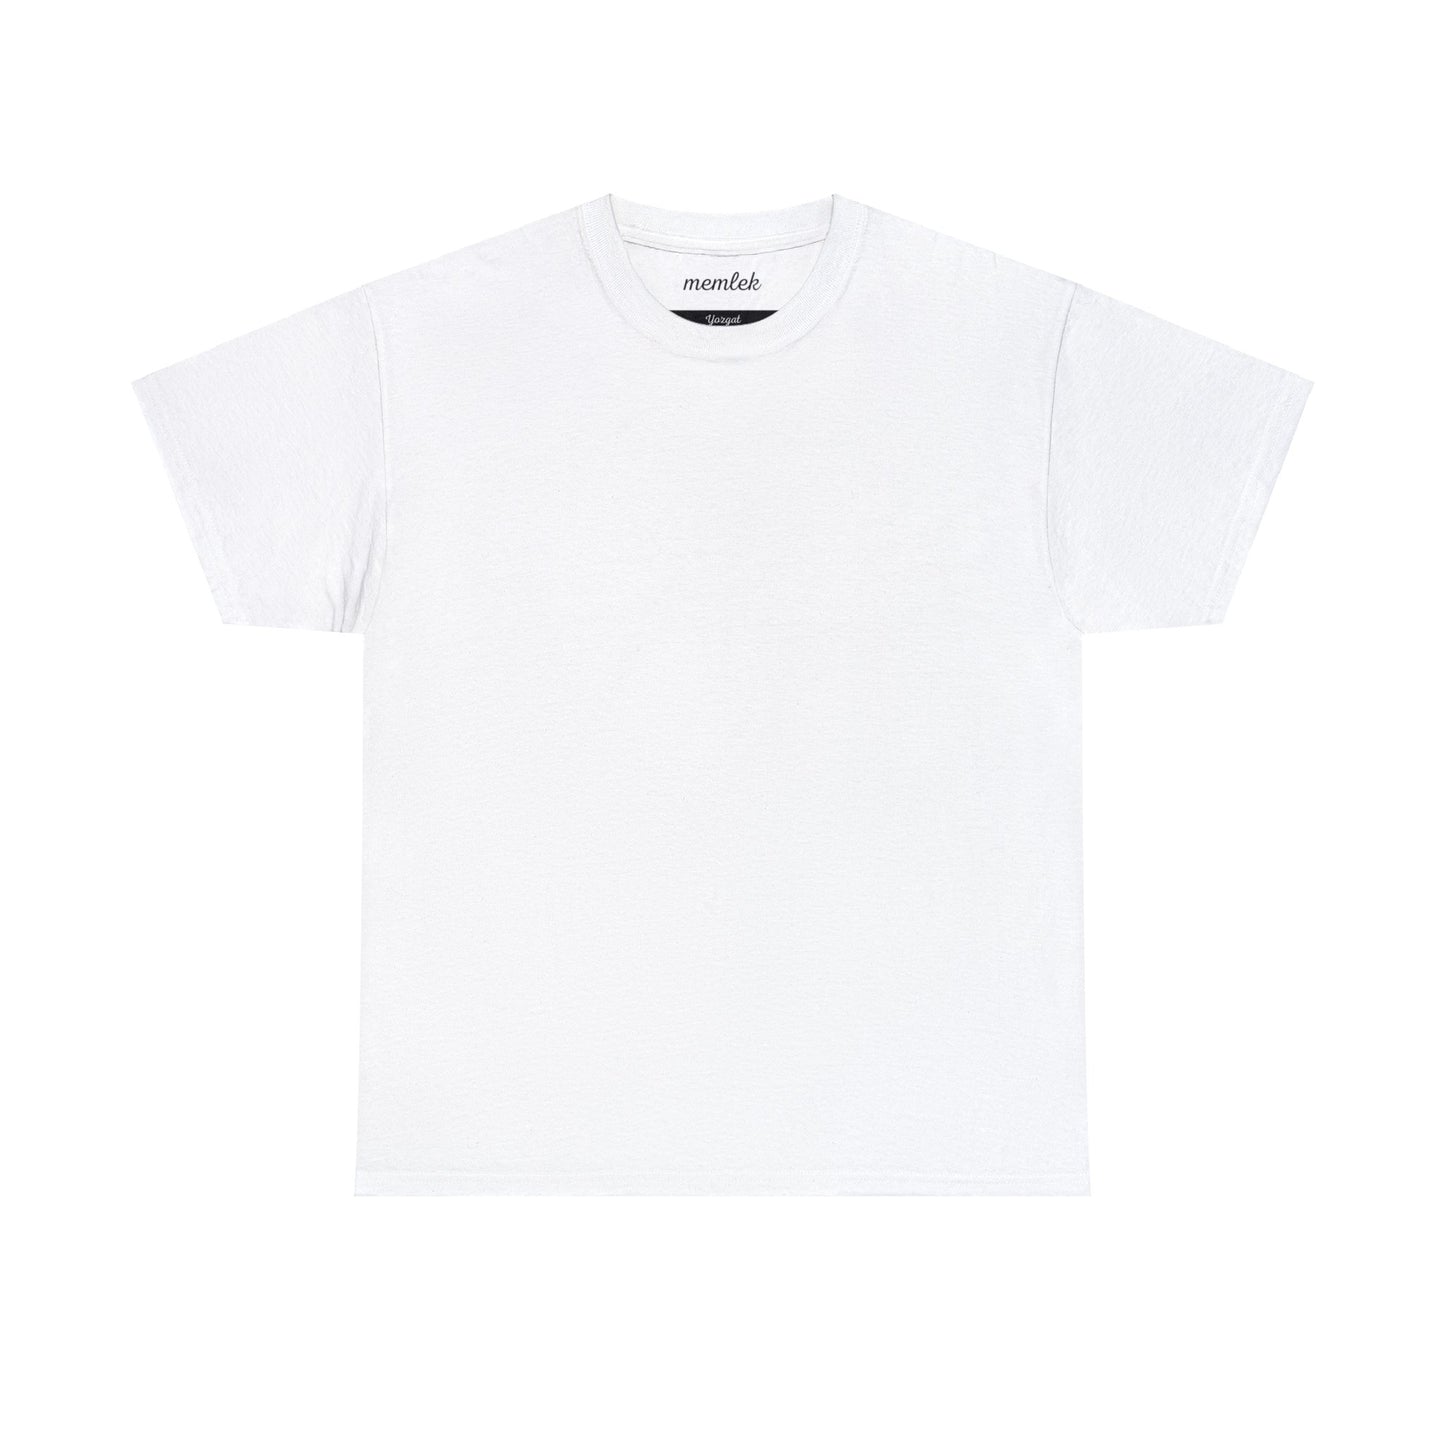 Kurt - 66 Yozgat - T-Shirt - Back Print - Black/White